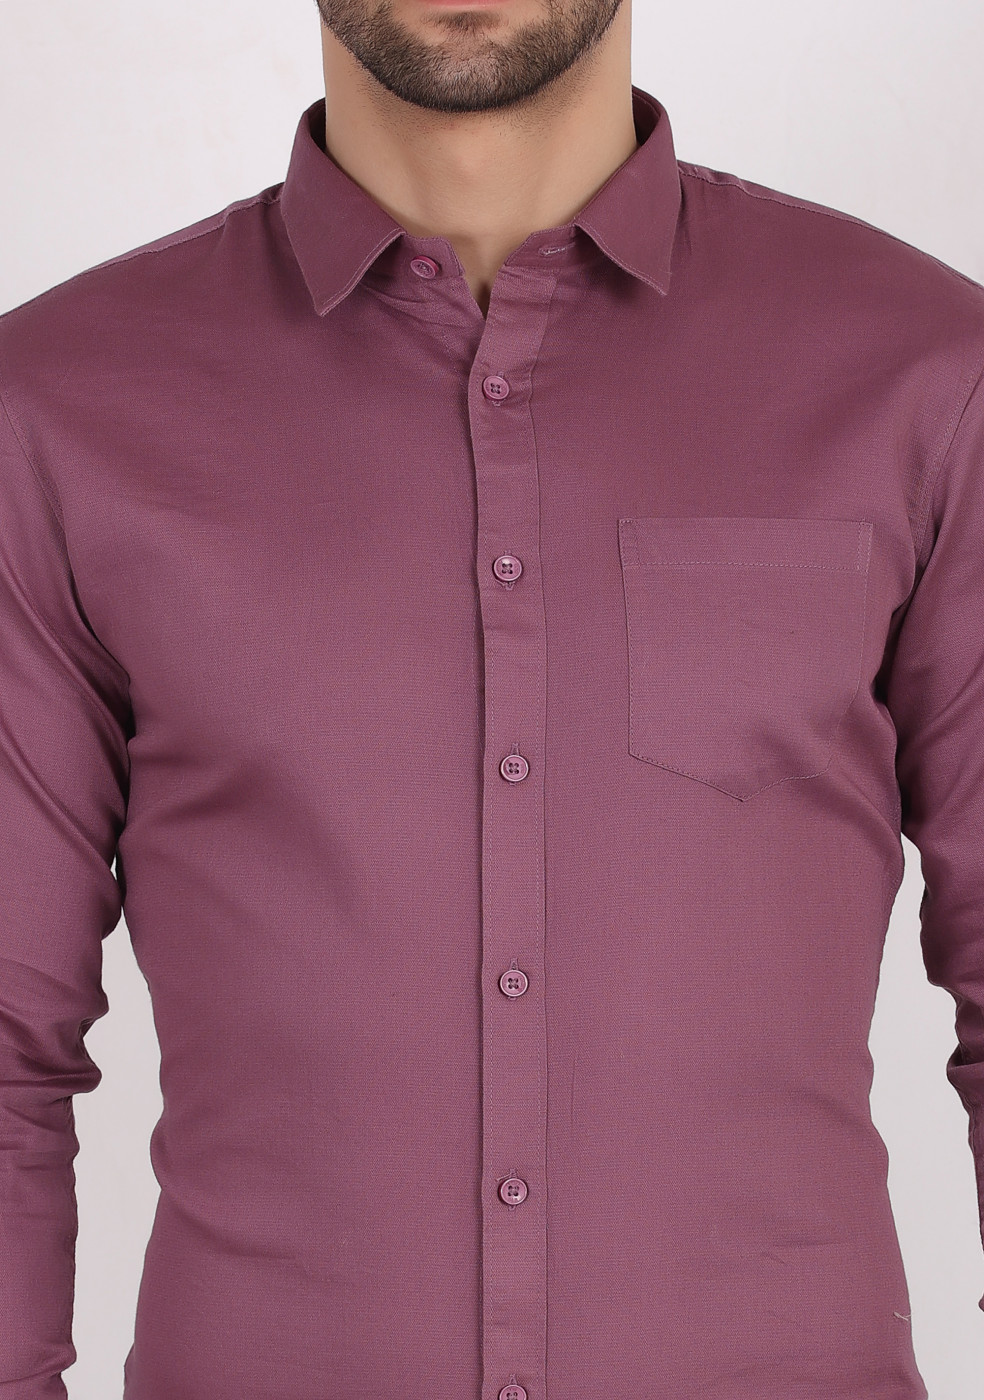 ASHTOM Onion Color Plain Cotton Shirt For Men